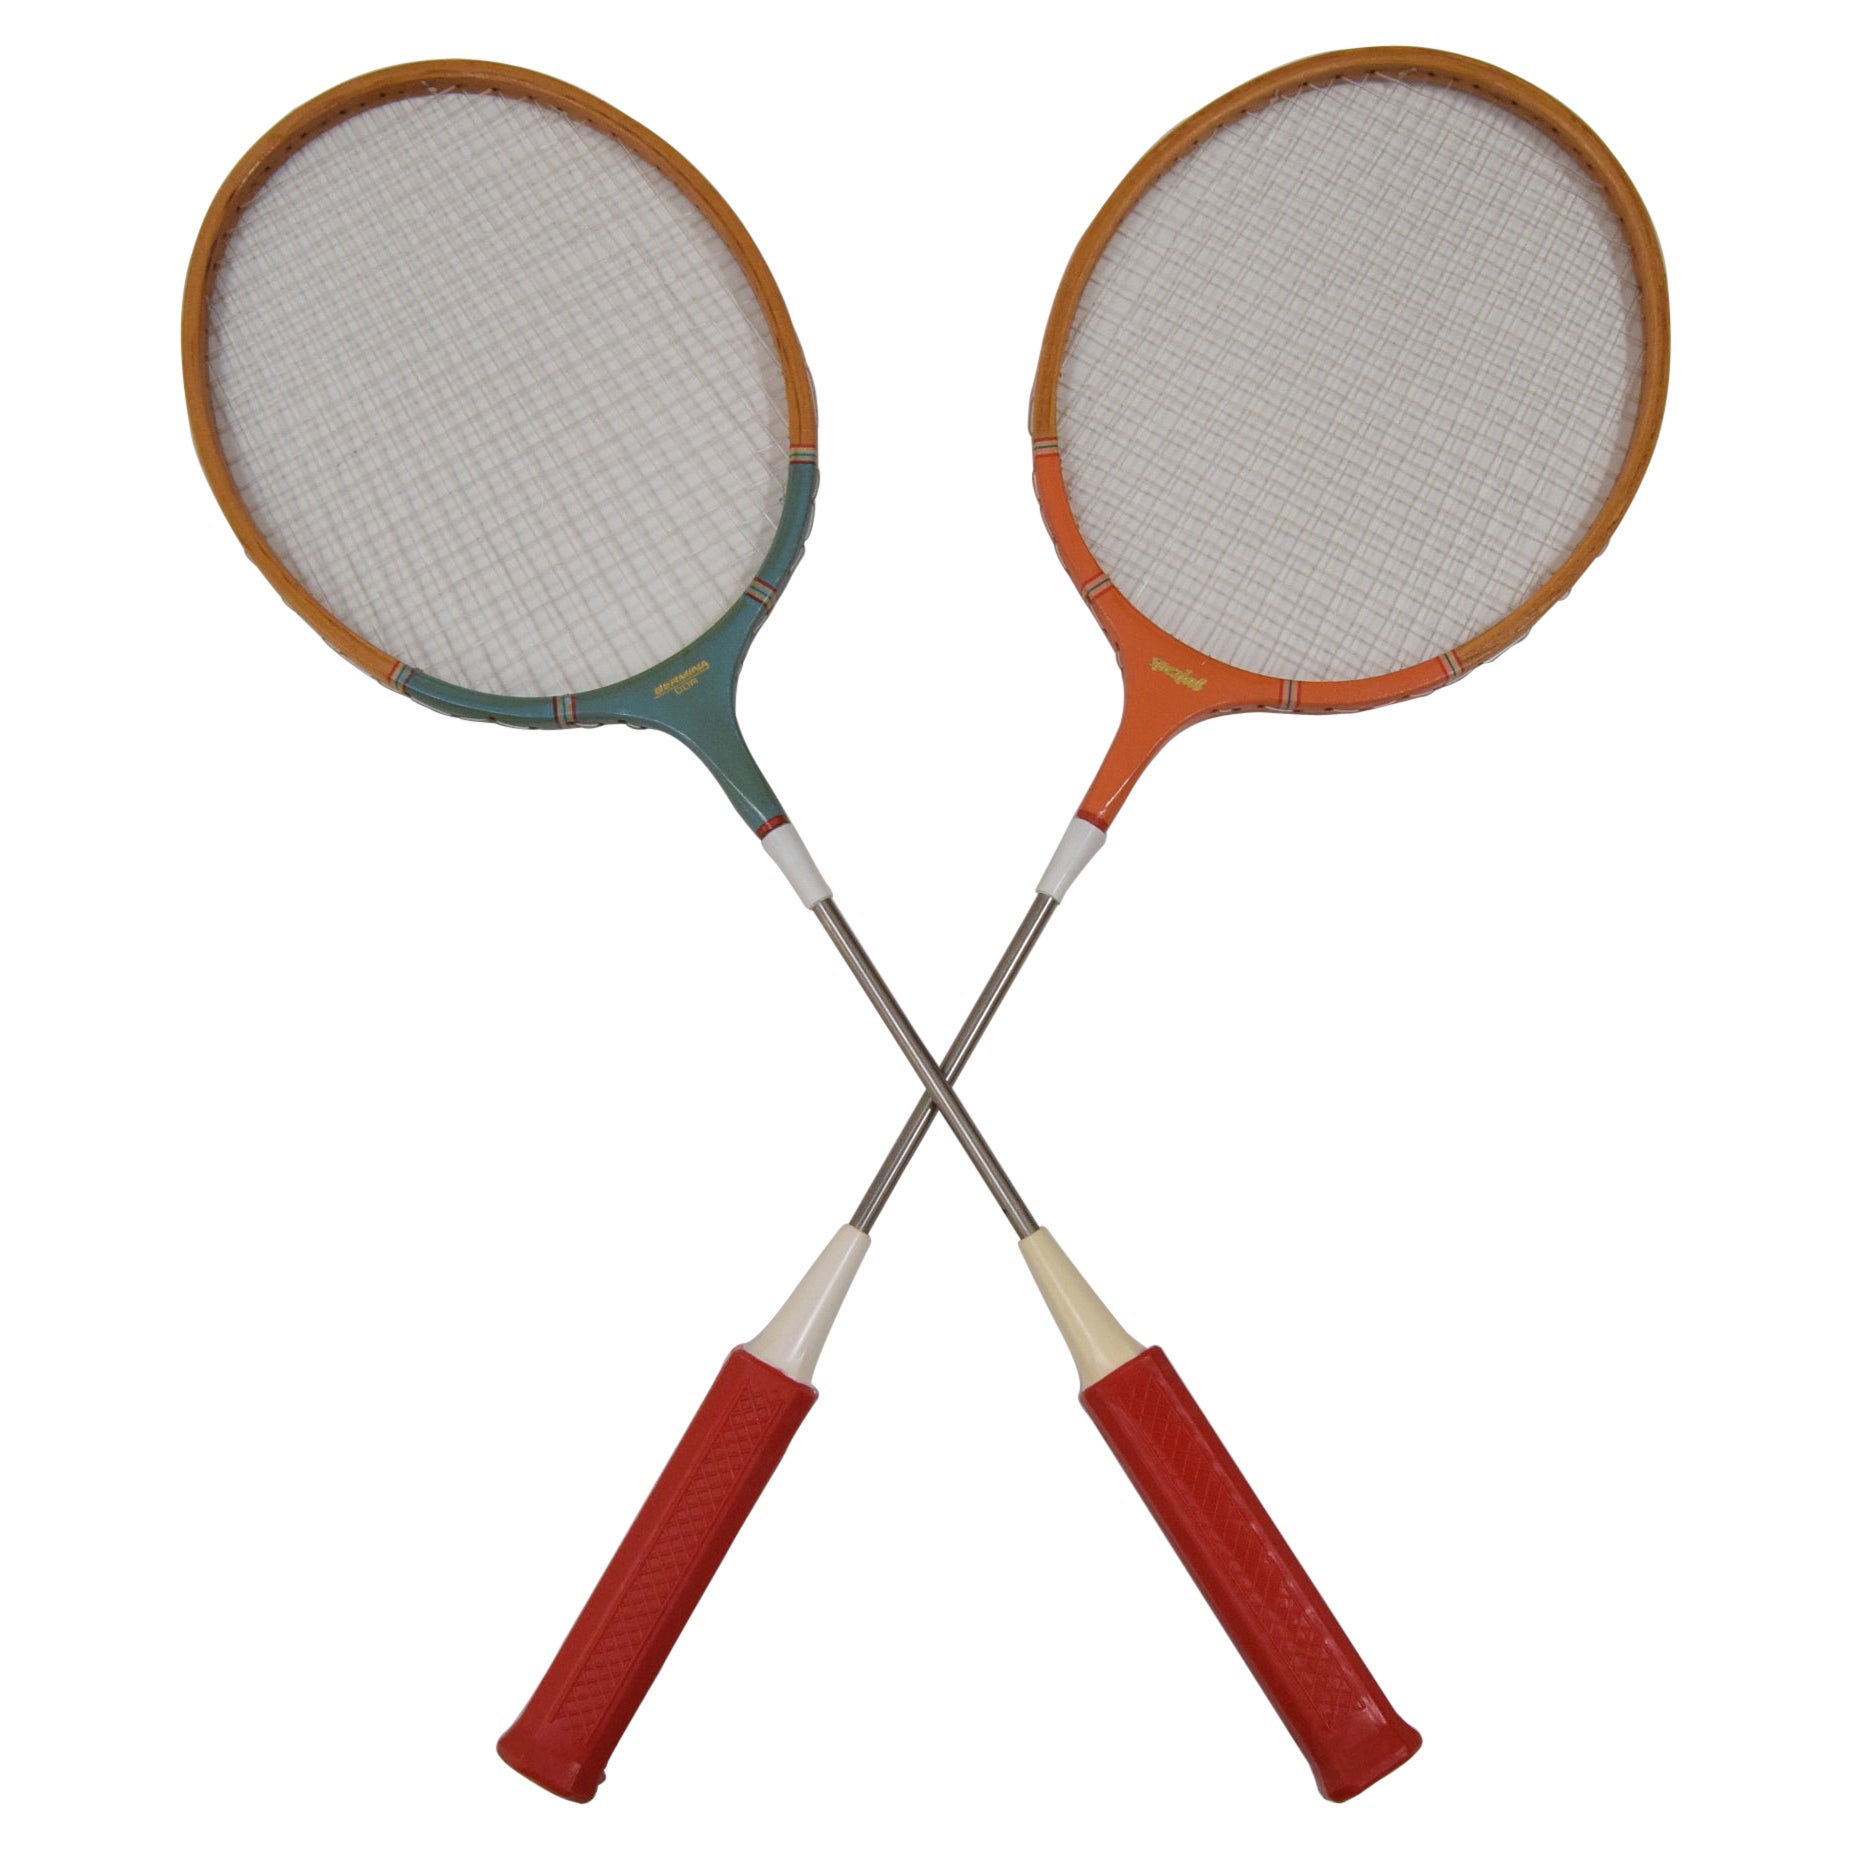 Pair of Vintage Badminton Rackets, circa 1980's